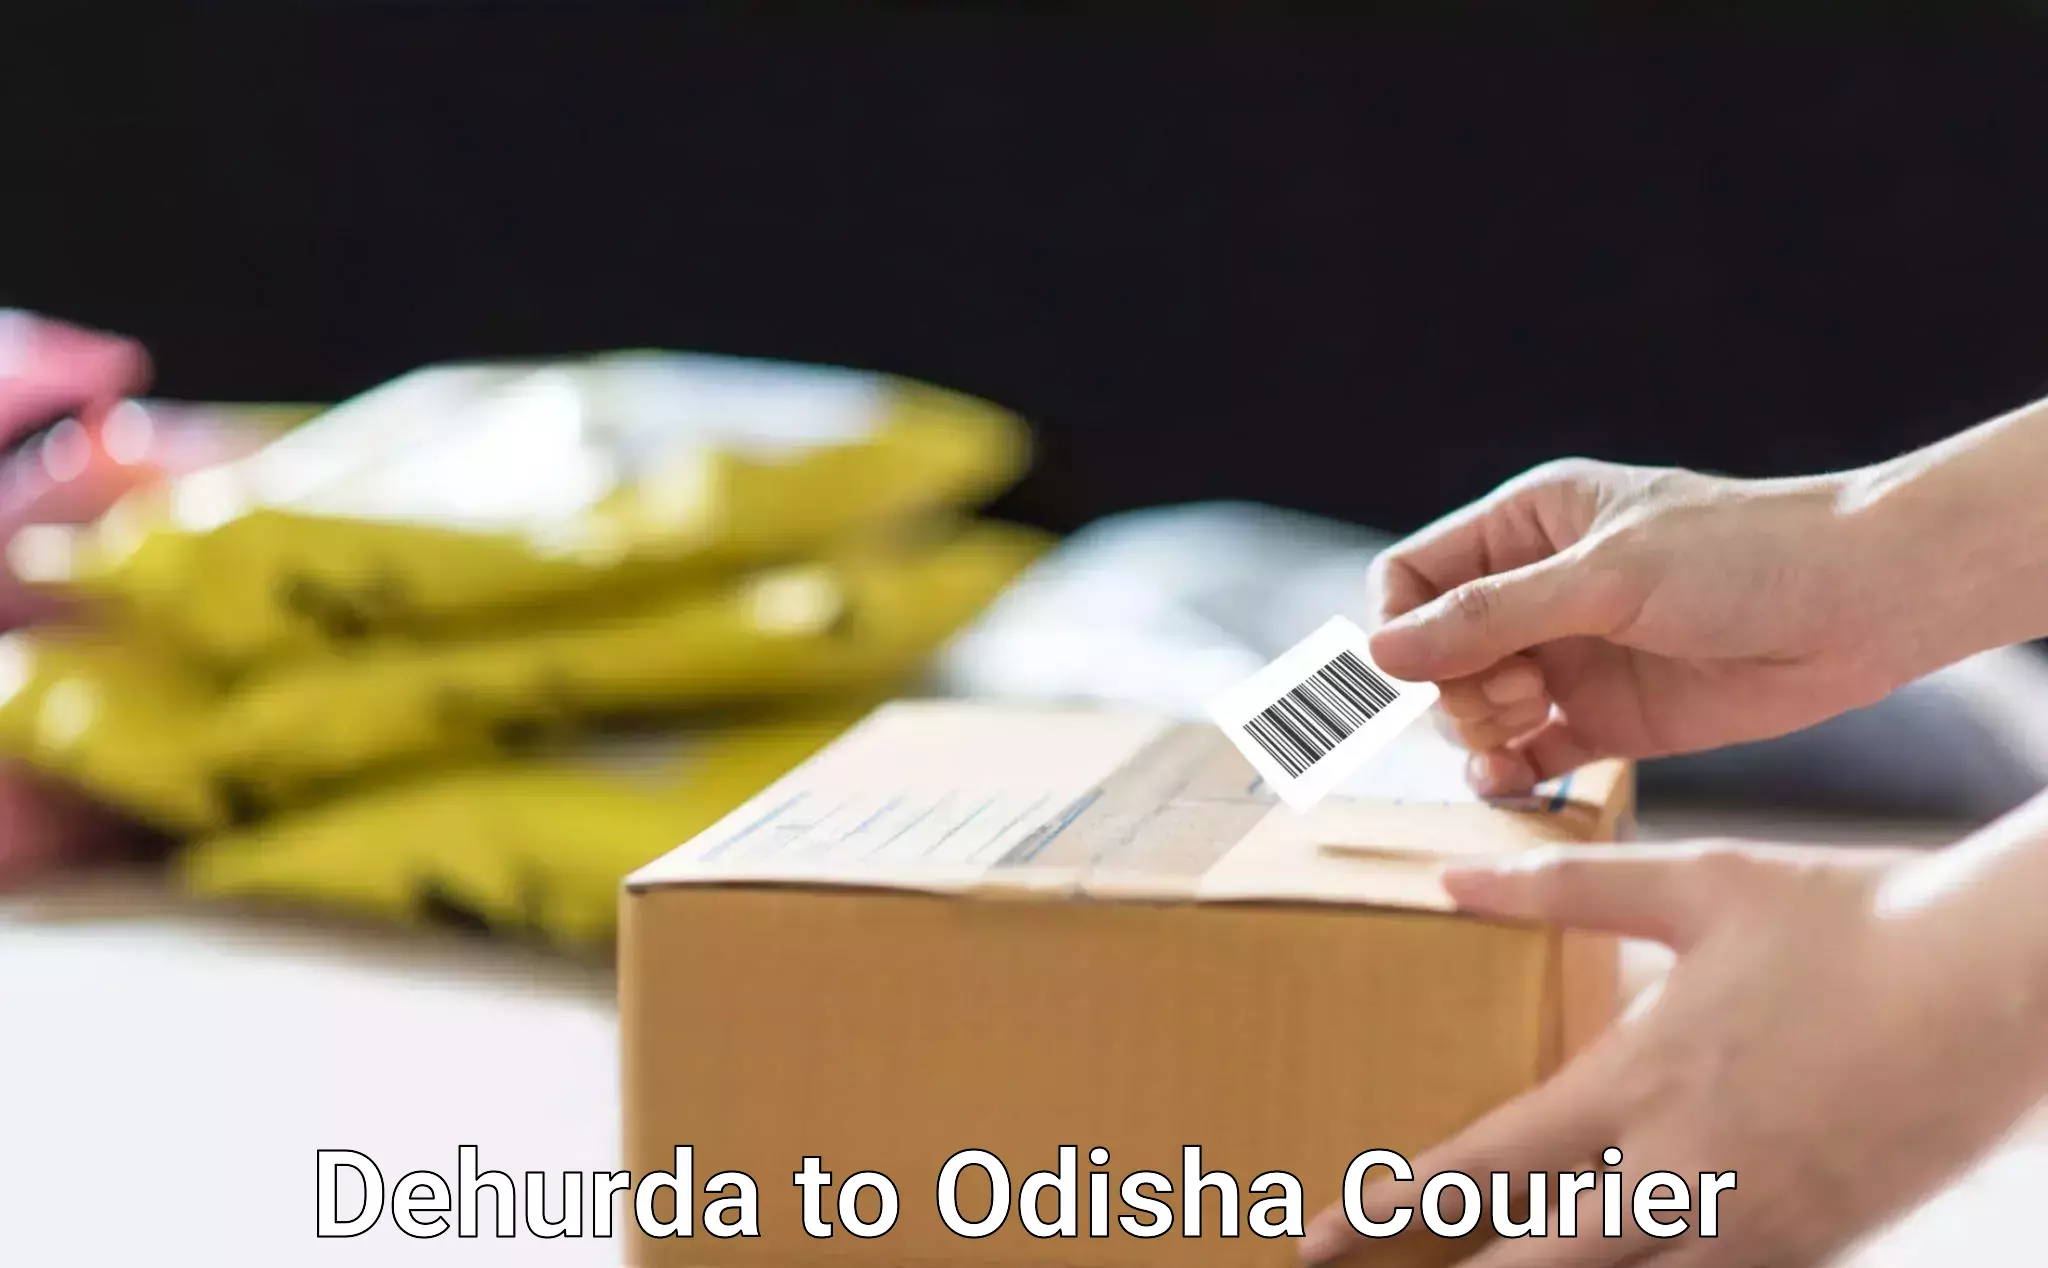 Professional courier handling Dehurda to Jagatpur